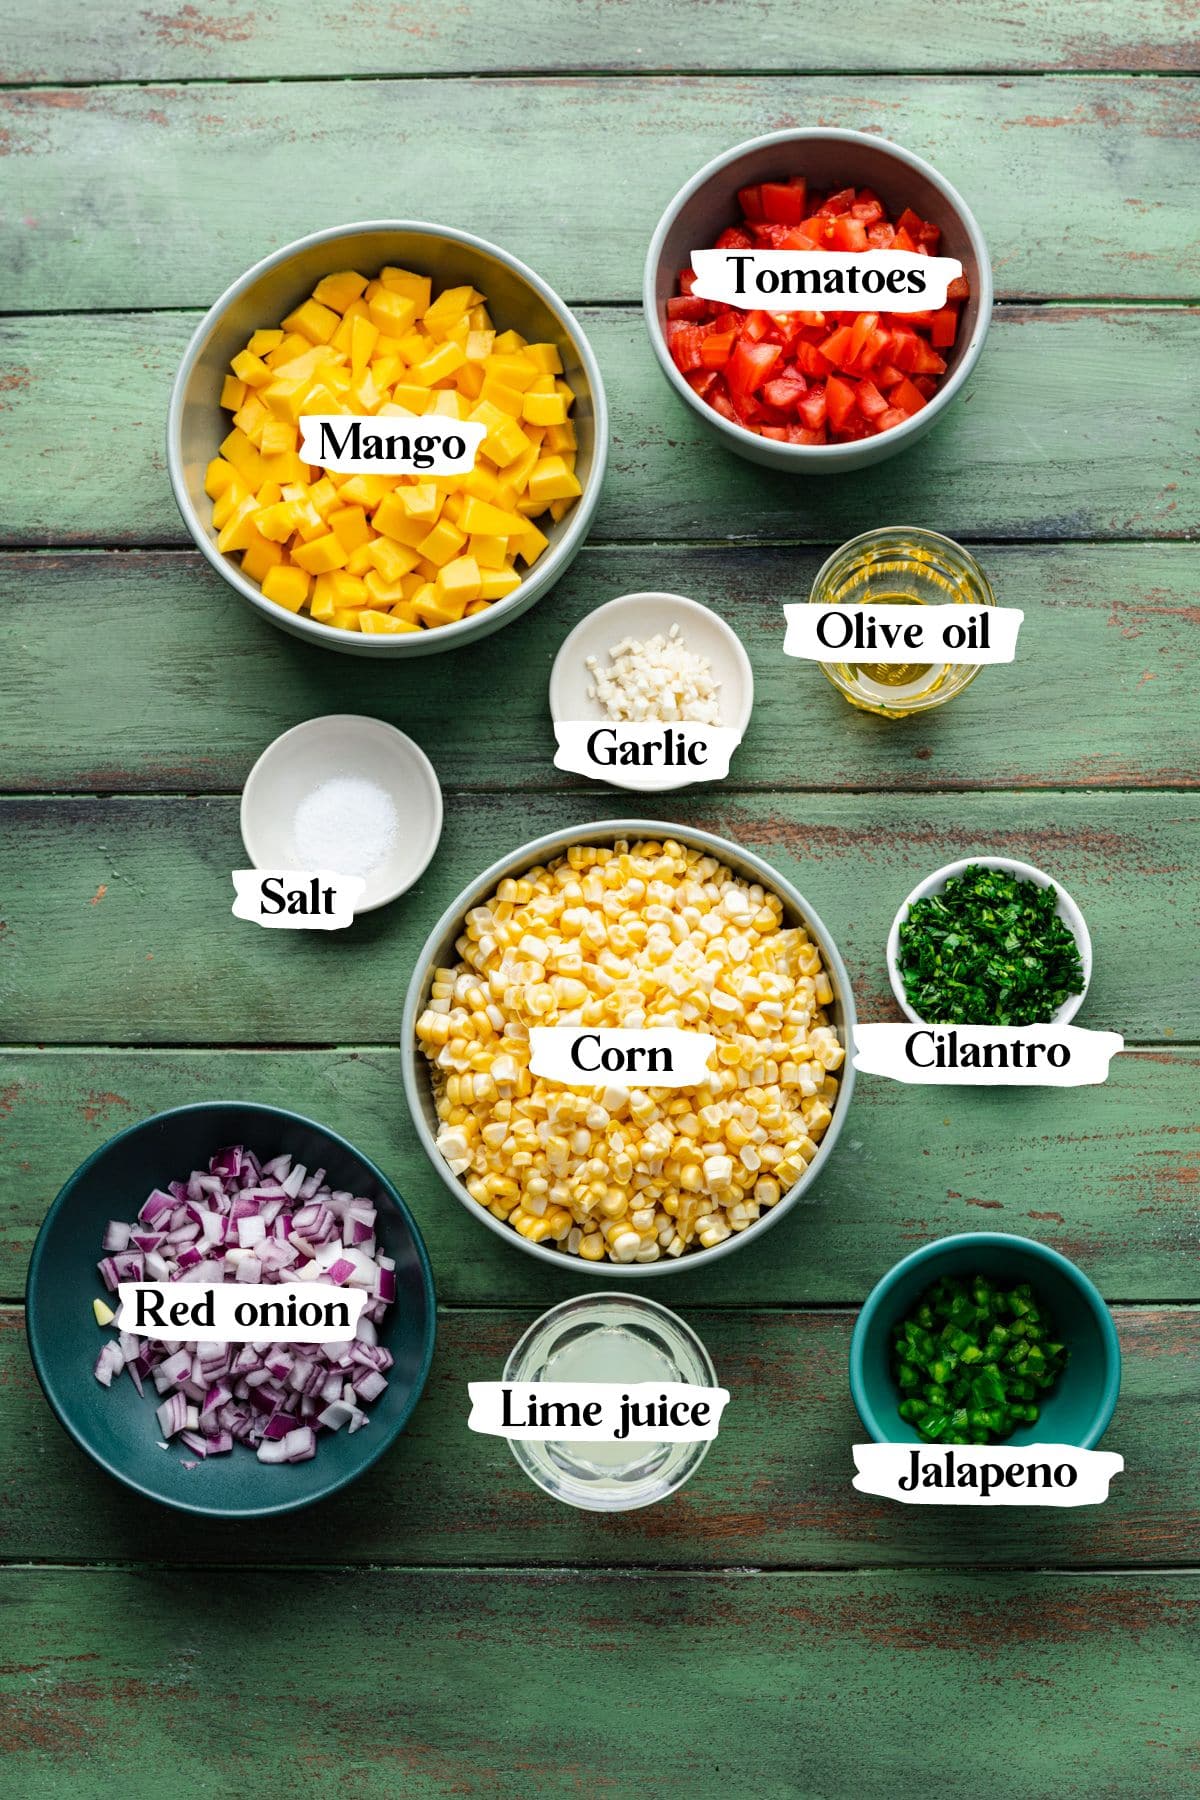 Mango corn salsa ingredients including mango and cilantro.